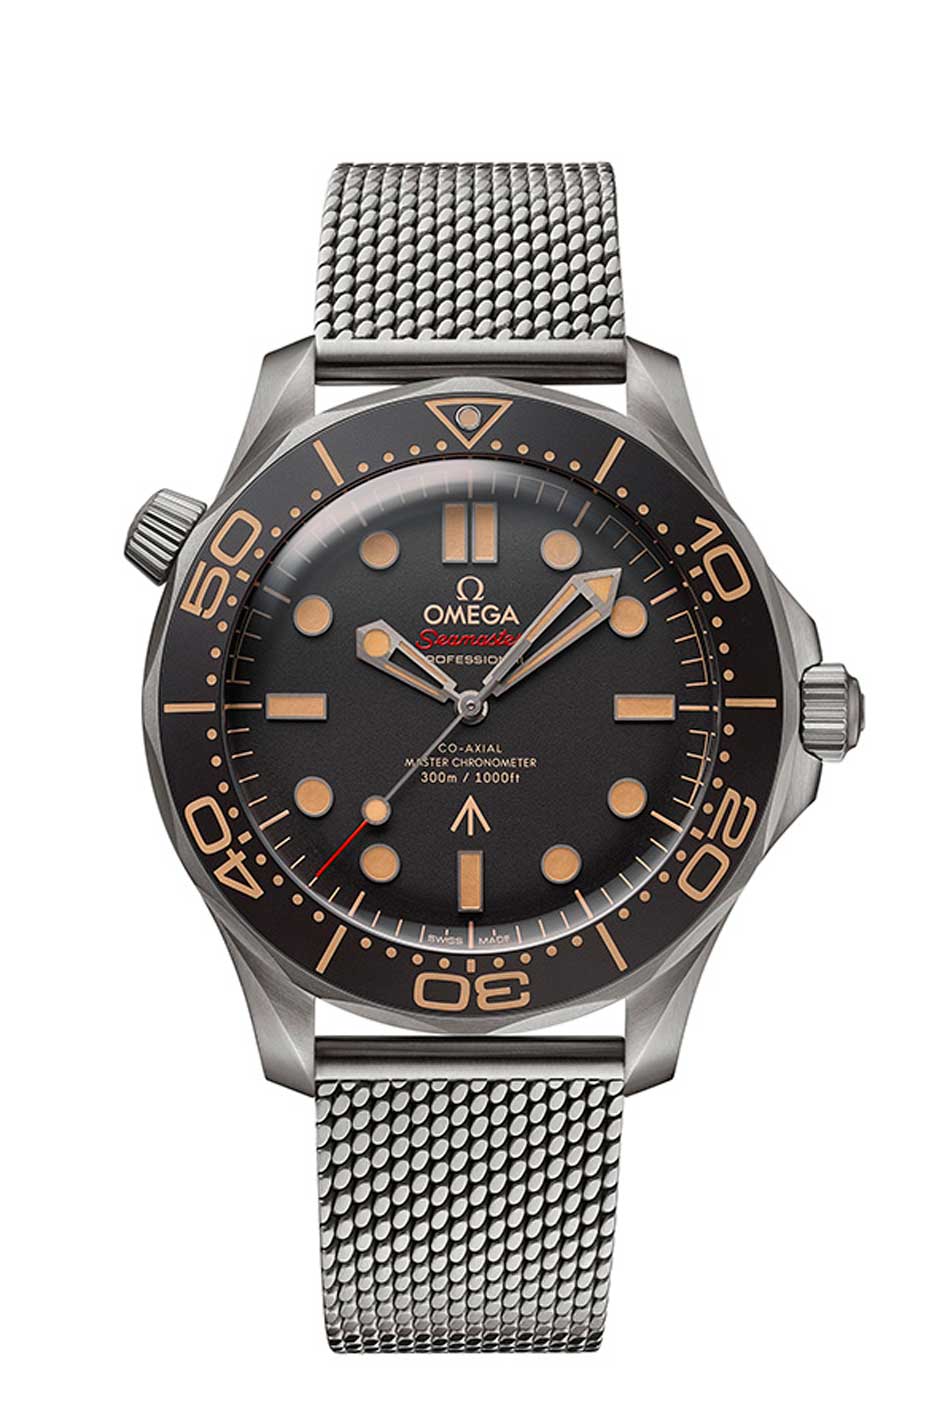 OMEGA Seamaster Diver 300M 007 Edition: el nuevo reloj de James Bond 007 | Tu Gran Viaje